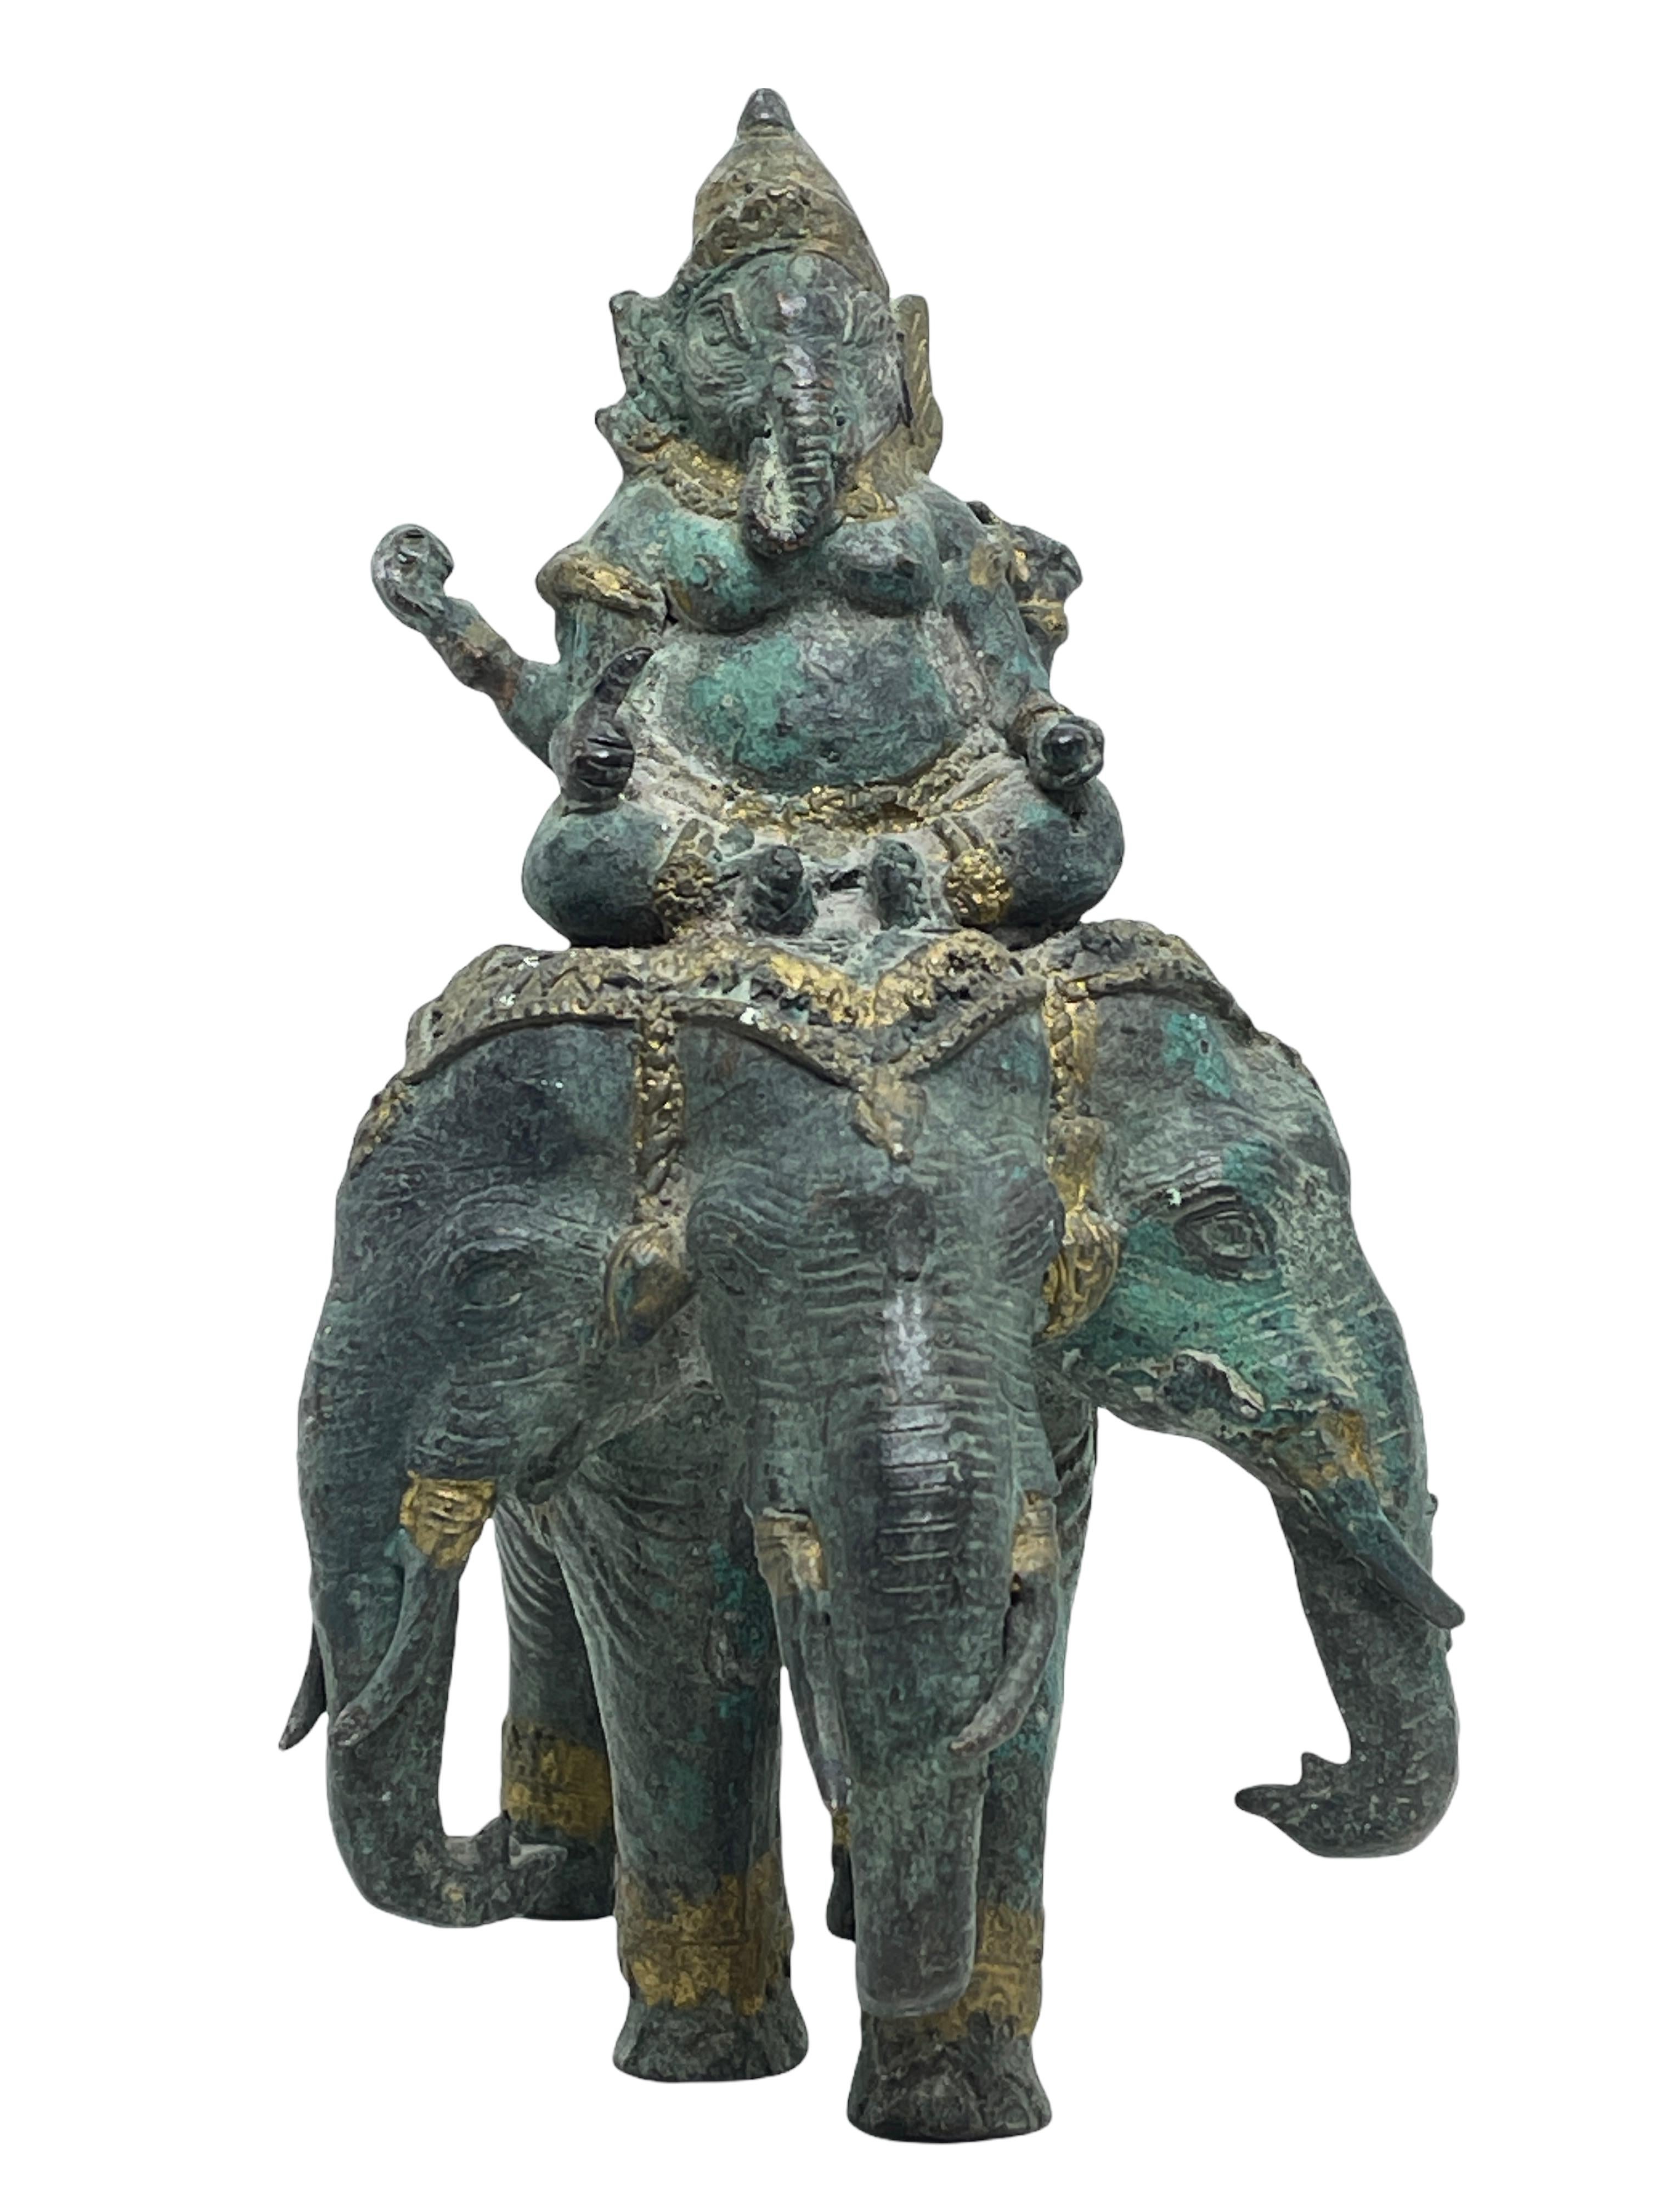 Folk Art Ganesha Ridding Elephant Sculpture Statue Vintage 1950s, India